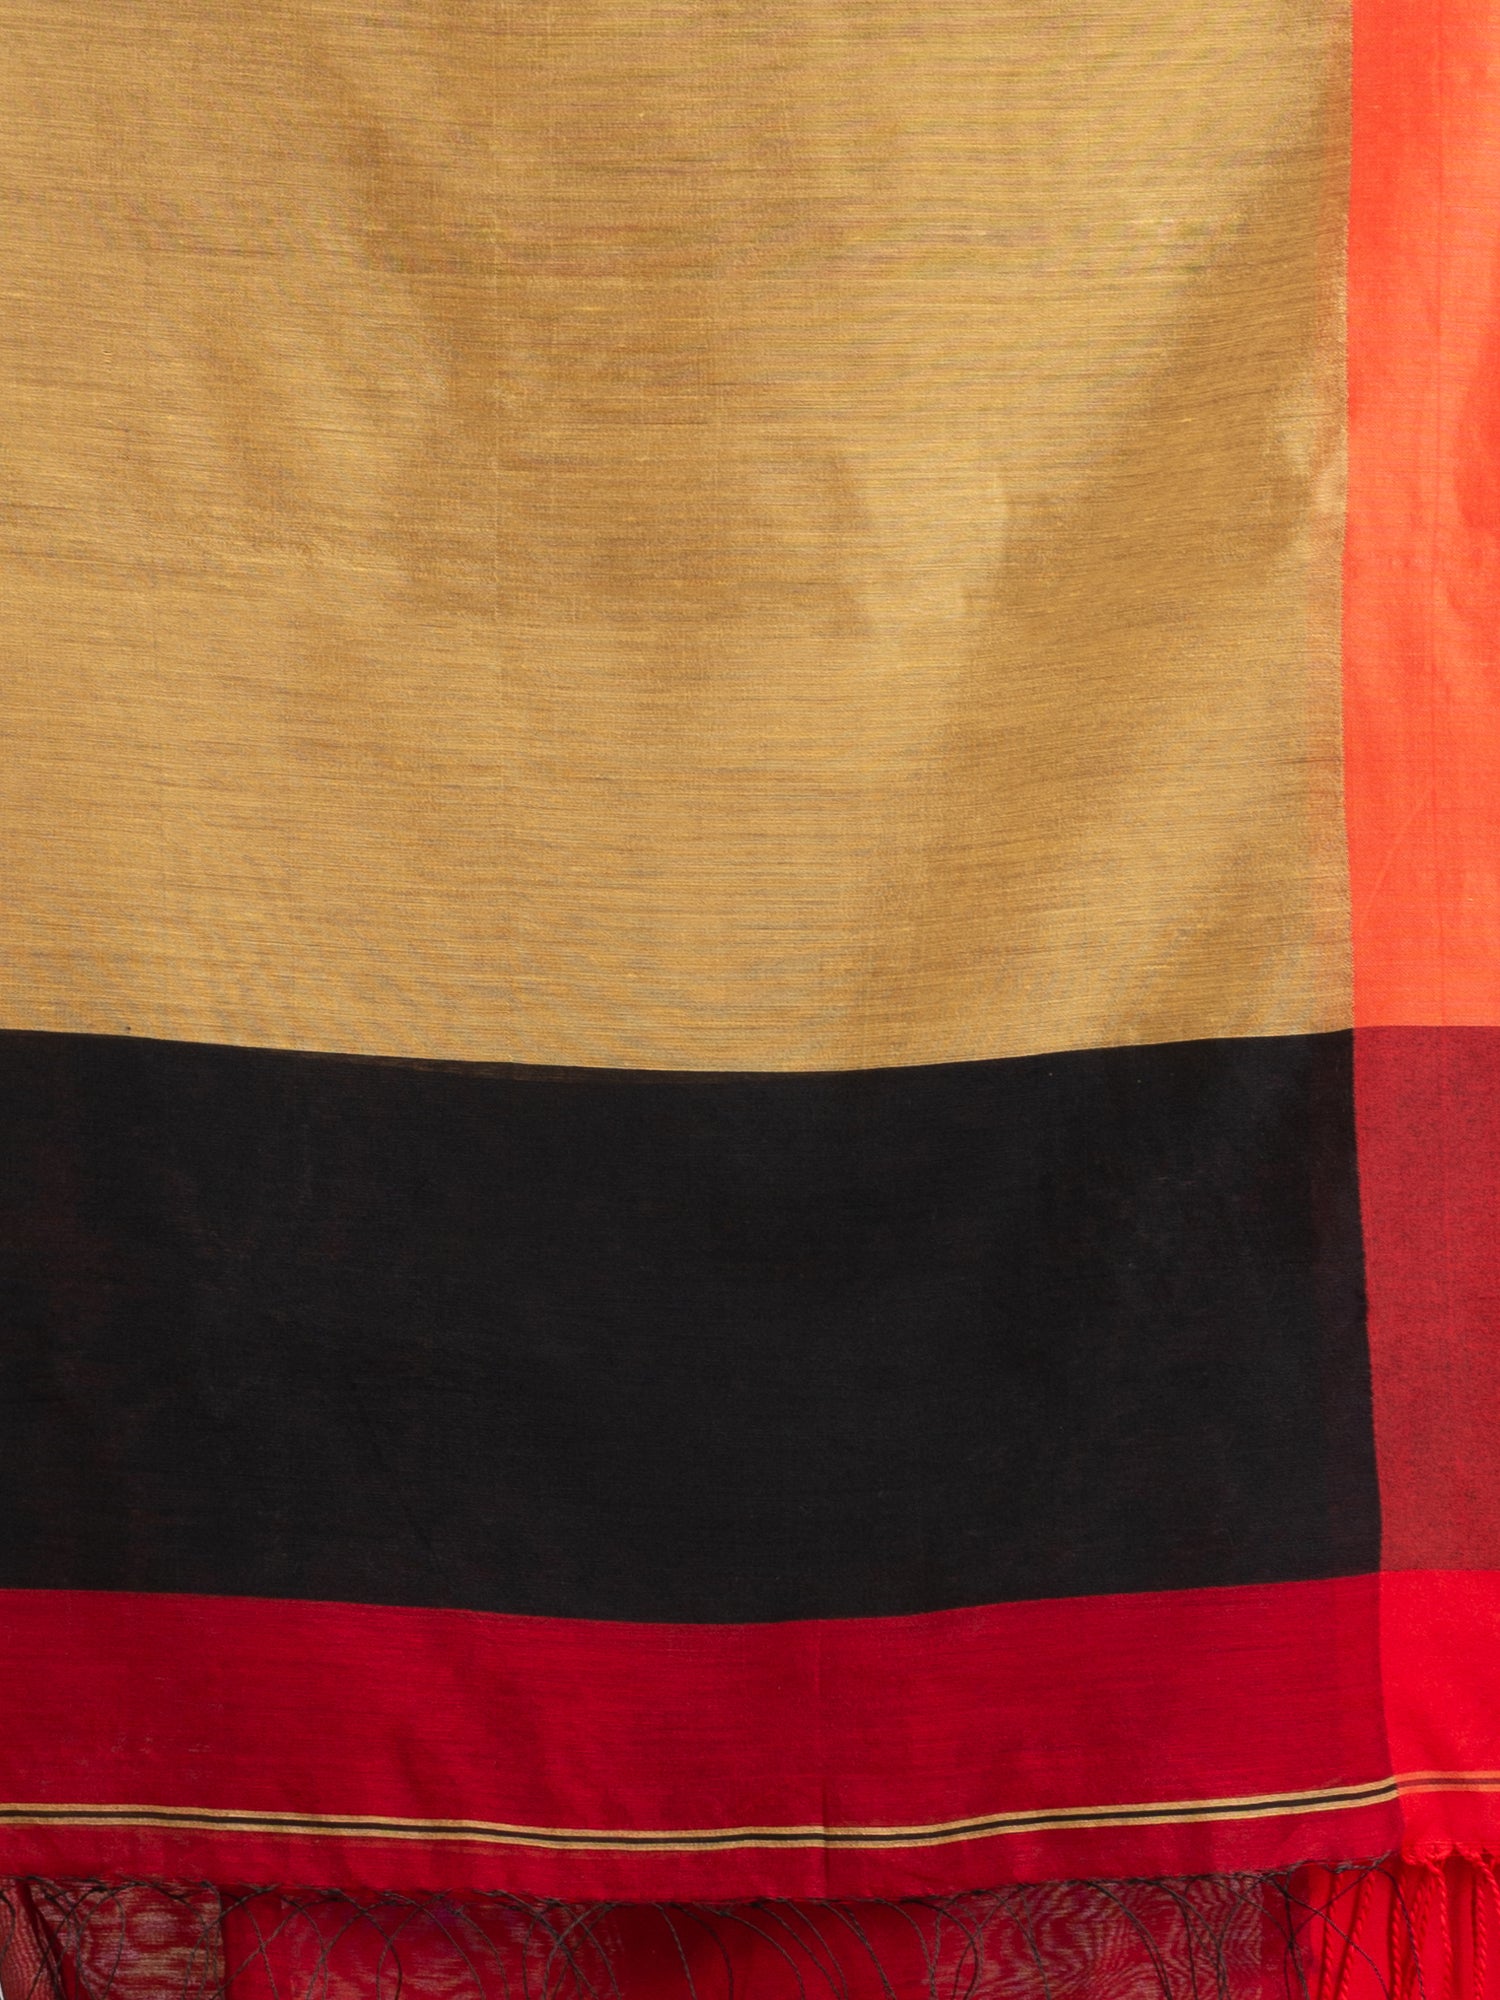 Women's Red Cotton Blend Handloom Jacquard handloom Saree - Angoshobha